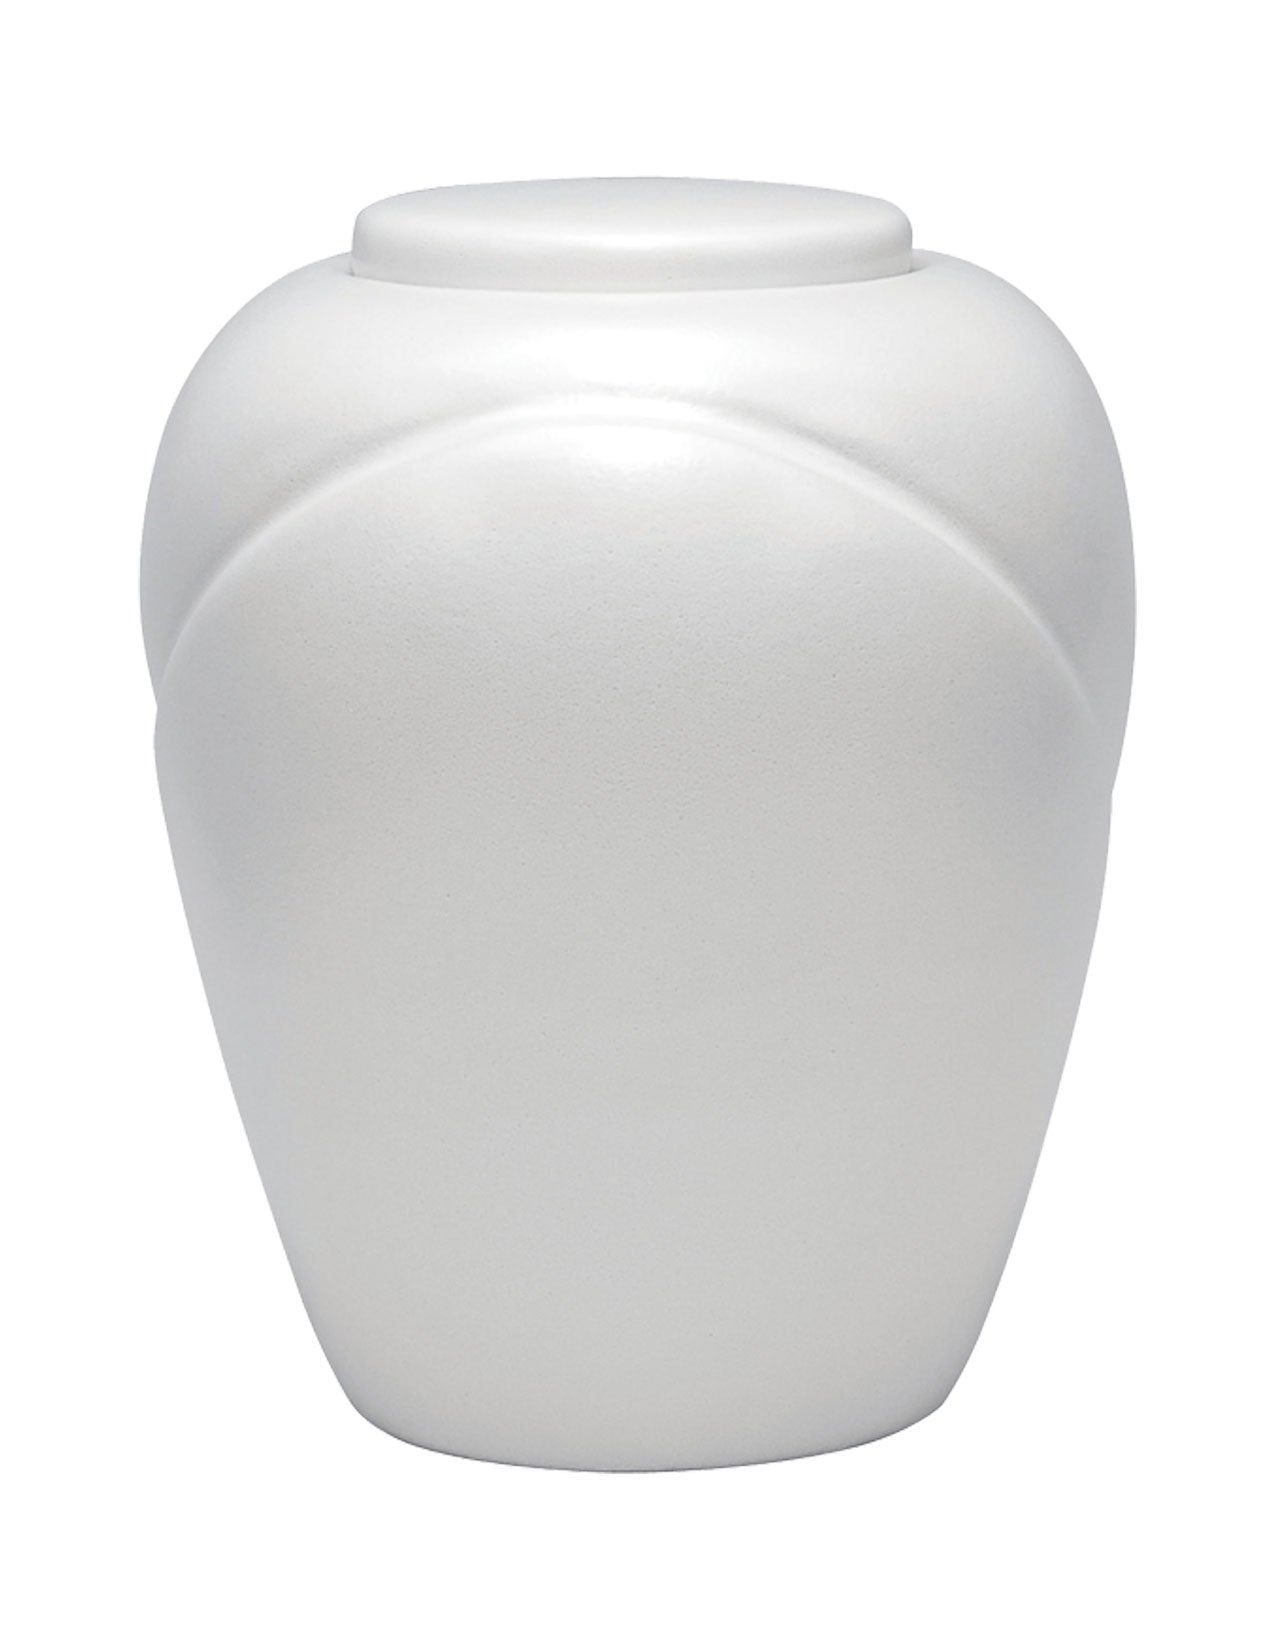 Pearl - Traditional Sand & Gelatin Biodegradable Cremation Urn